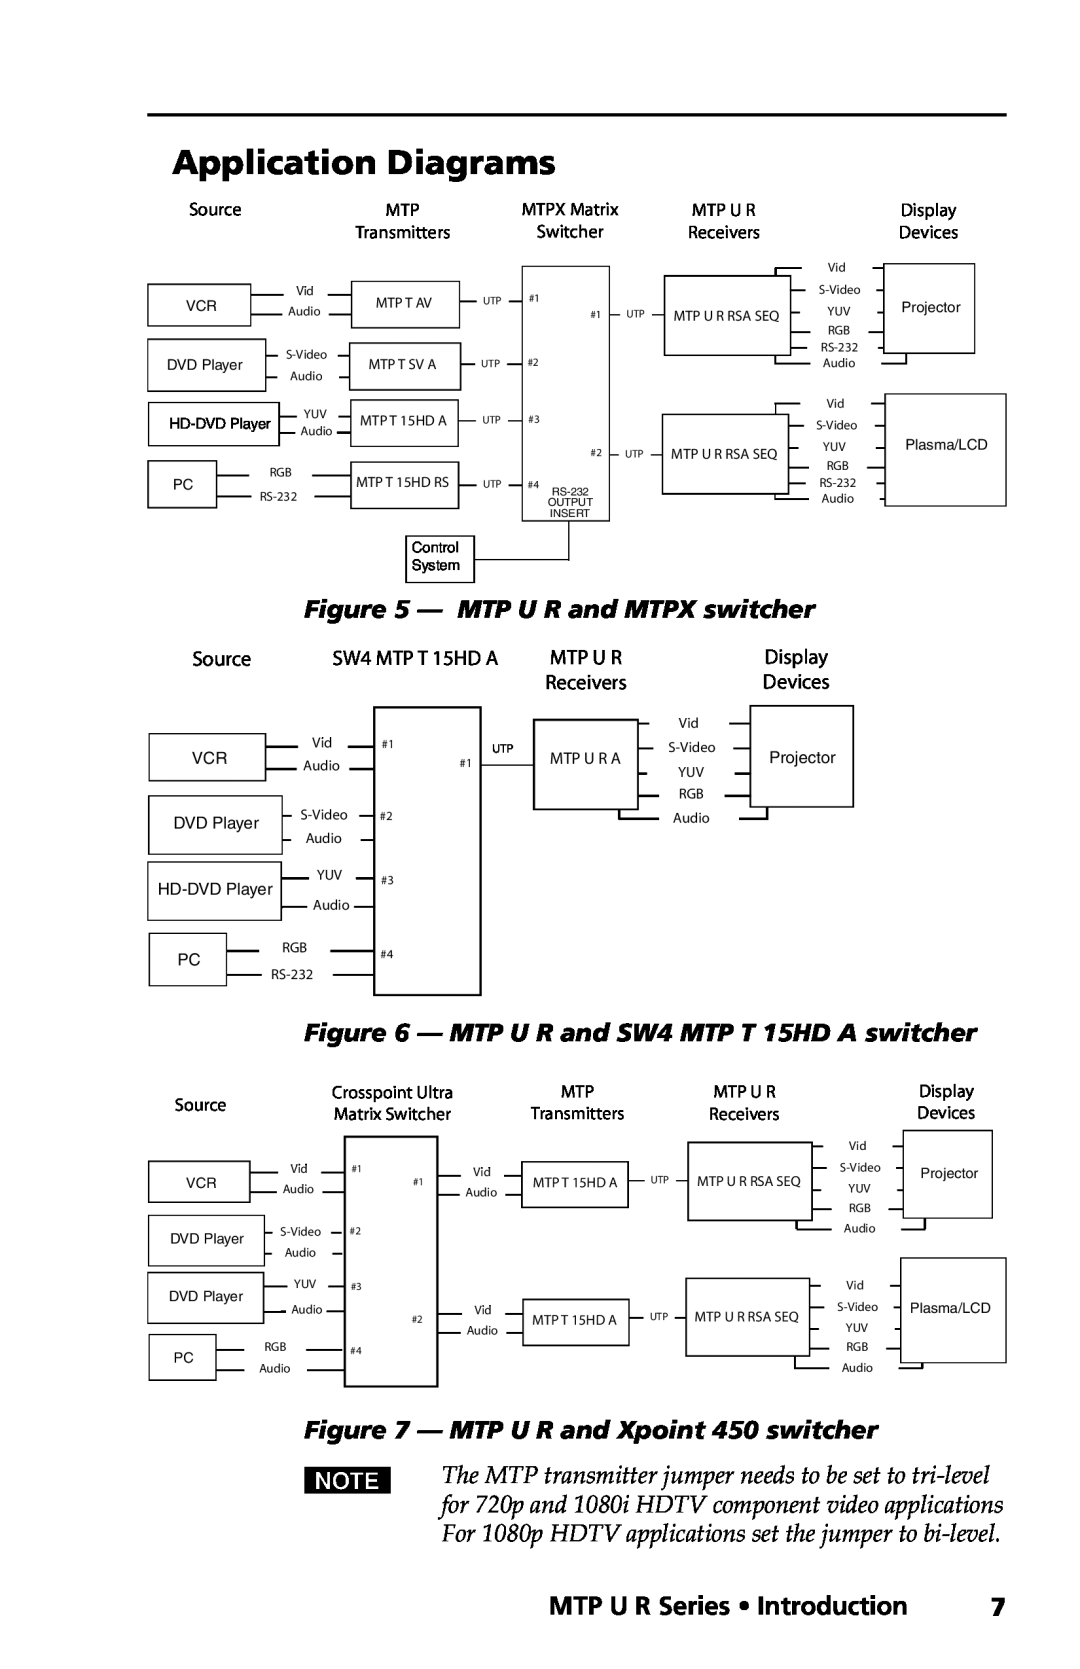 Extron electronic MTP U R RSA SEQ Application Diagrams, MTP U R Series Introduction, MTP U R and MTPX switcher, Source 